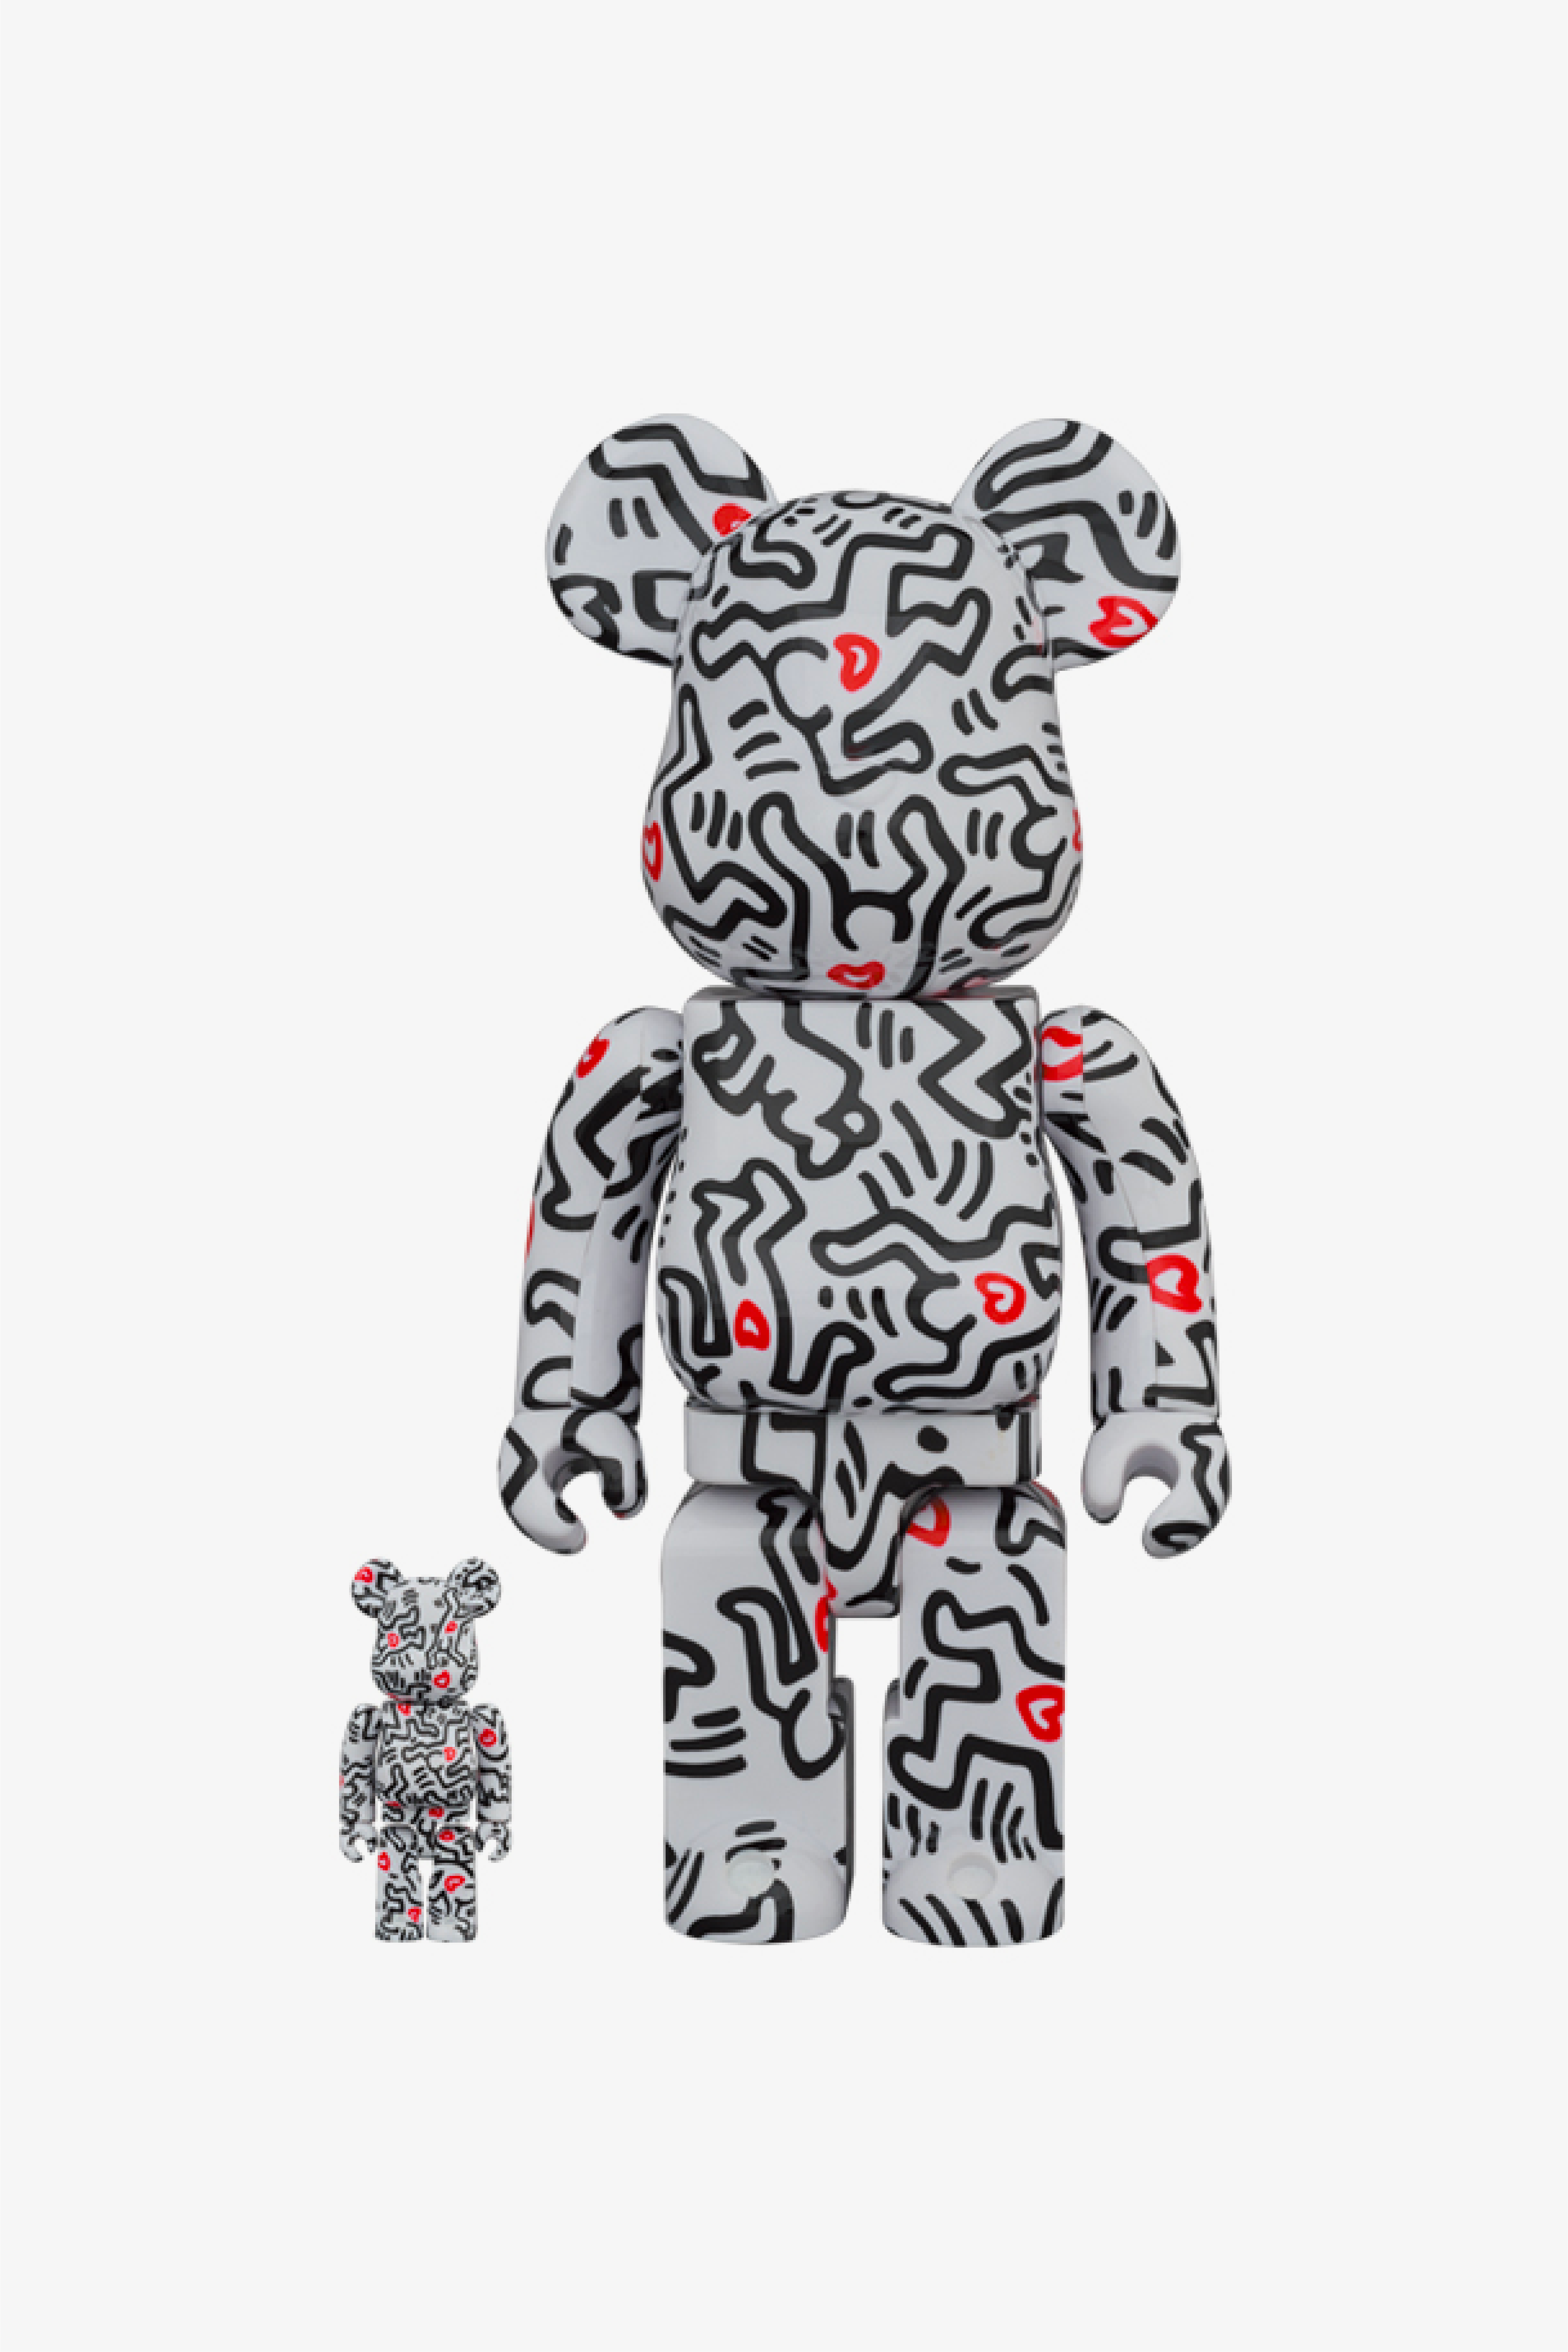 Selectshop FRAME - MEDICOM TOY Be@rbrick Keith Haring #8 100% & 400% Collectibles Dubai